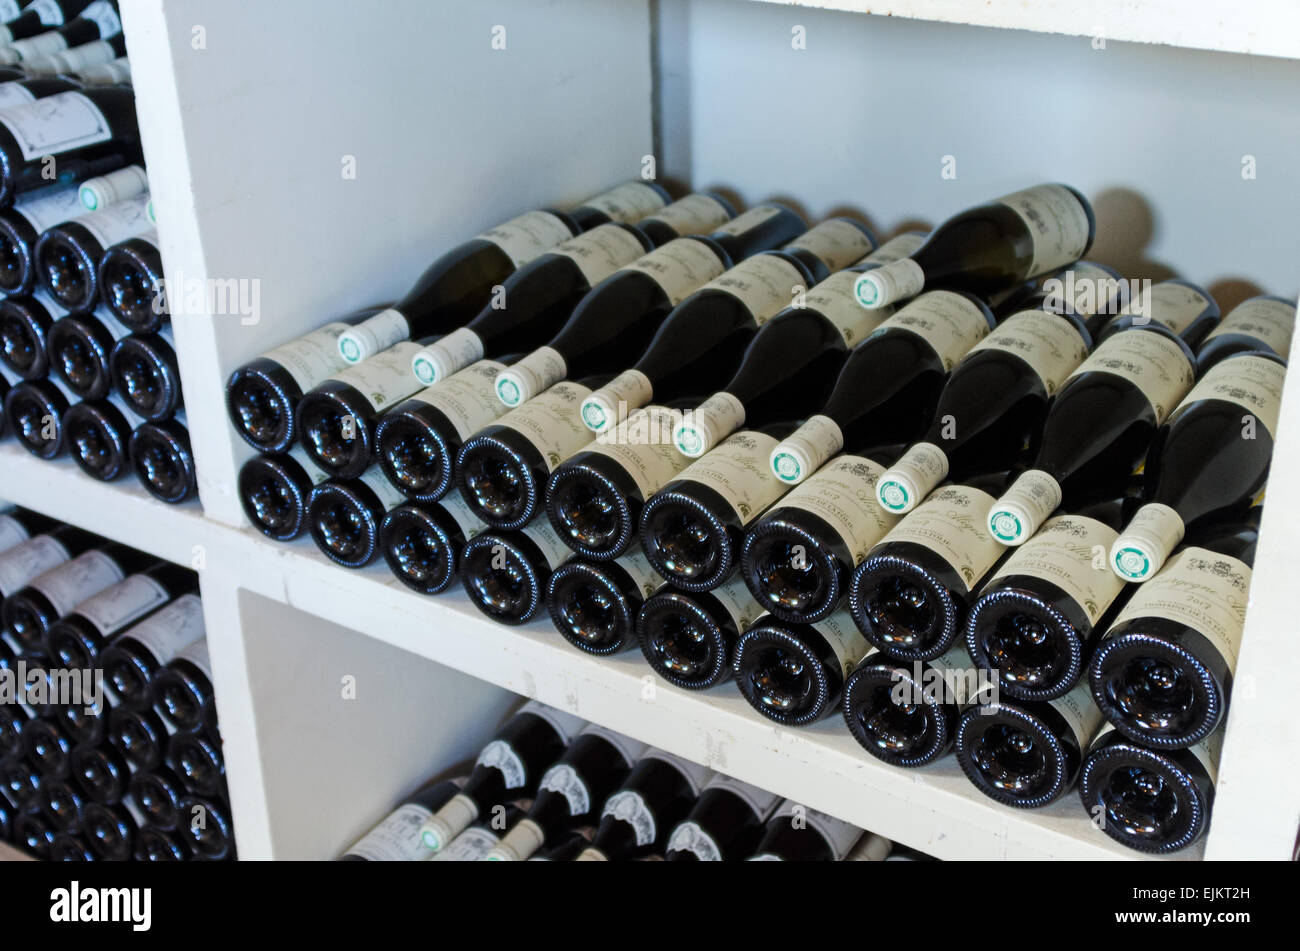 Bottles of Aligoté wine at Domaine de la Folie, a vineyard near Chagny in the Côte Chalonnaise of Burgundy, France. Stock Photo